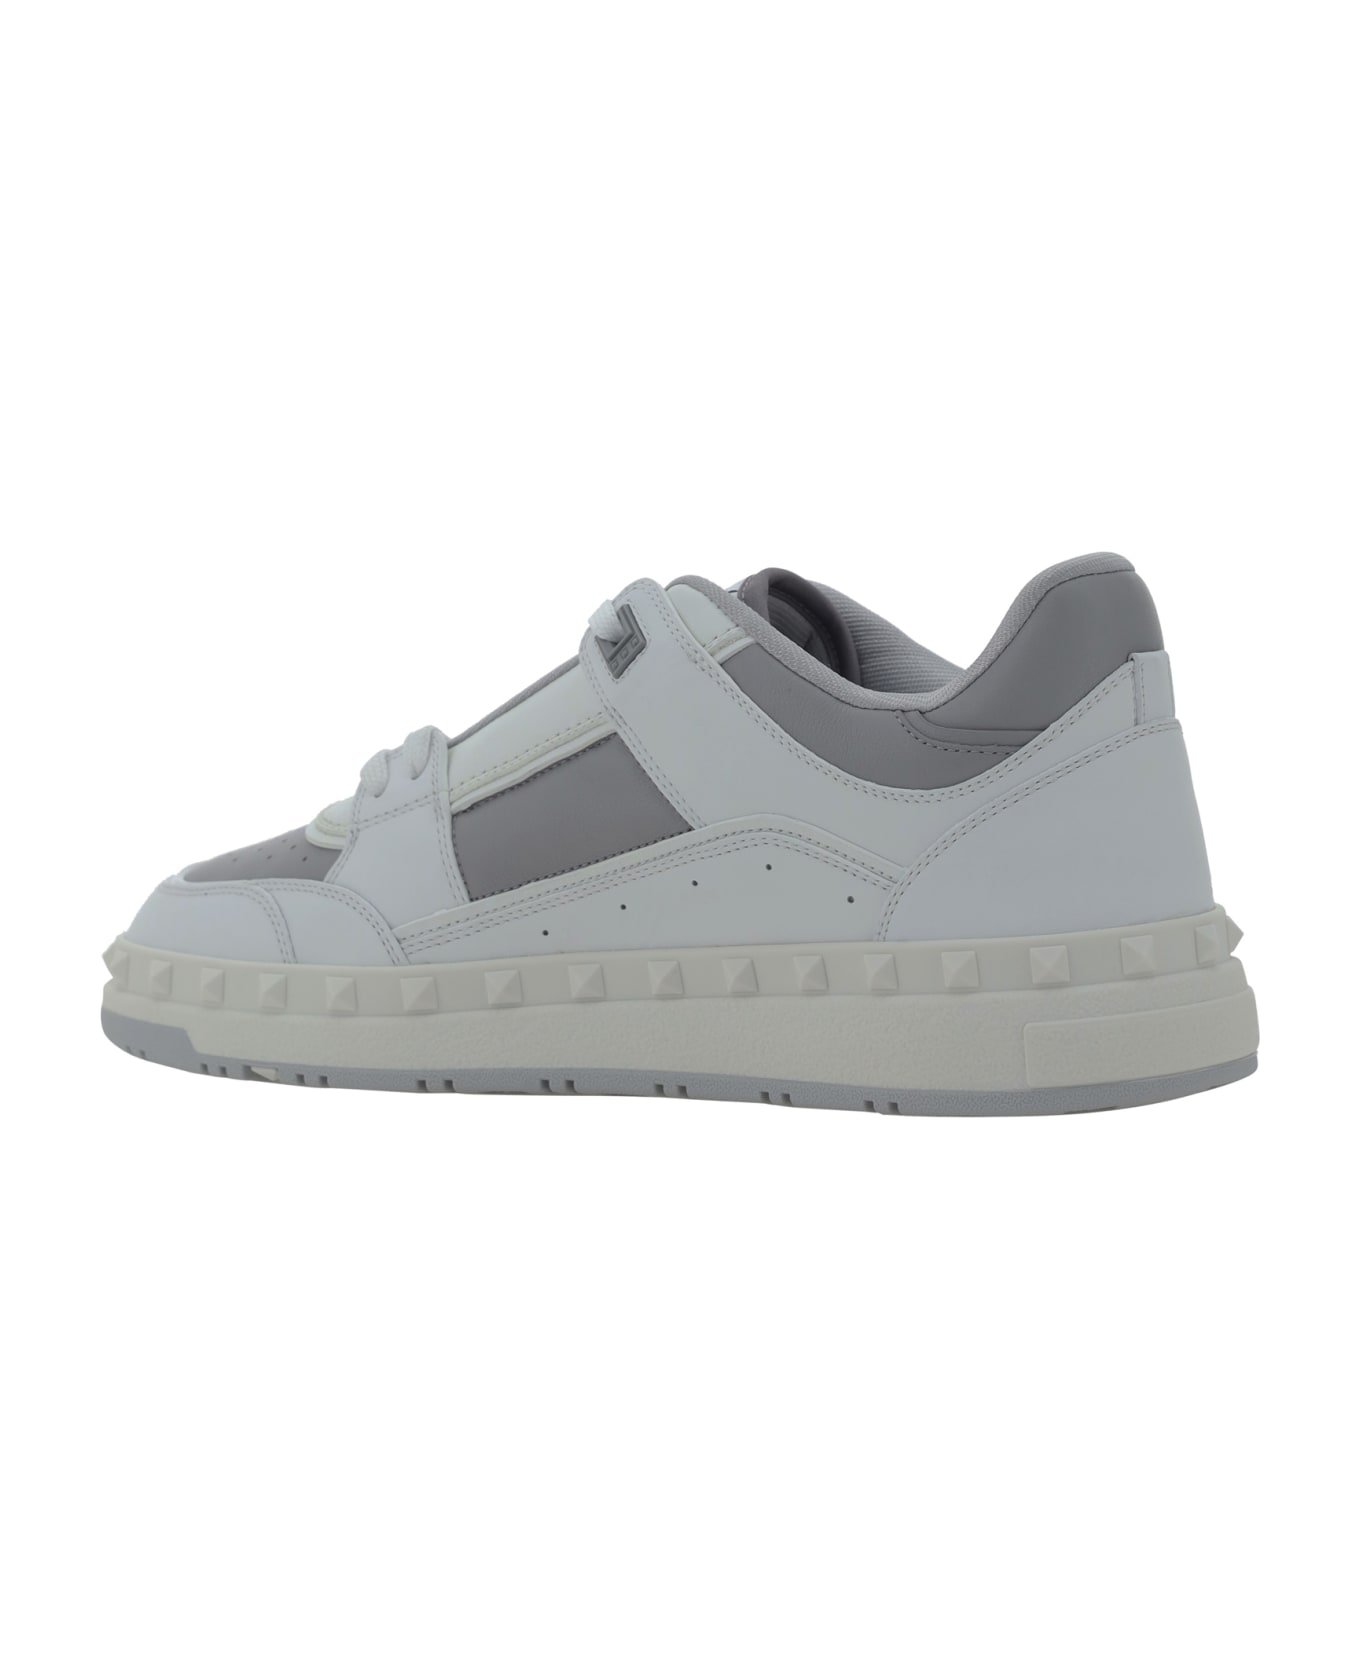 Valentino Garavani Freedots Sneakers - Bianco/pastel Grey